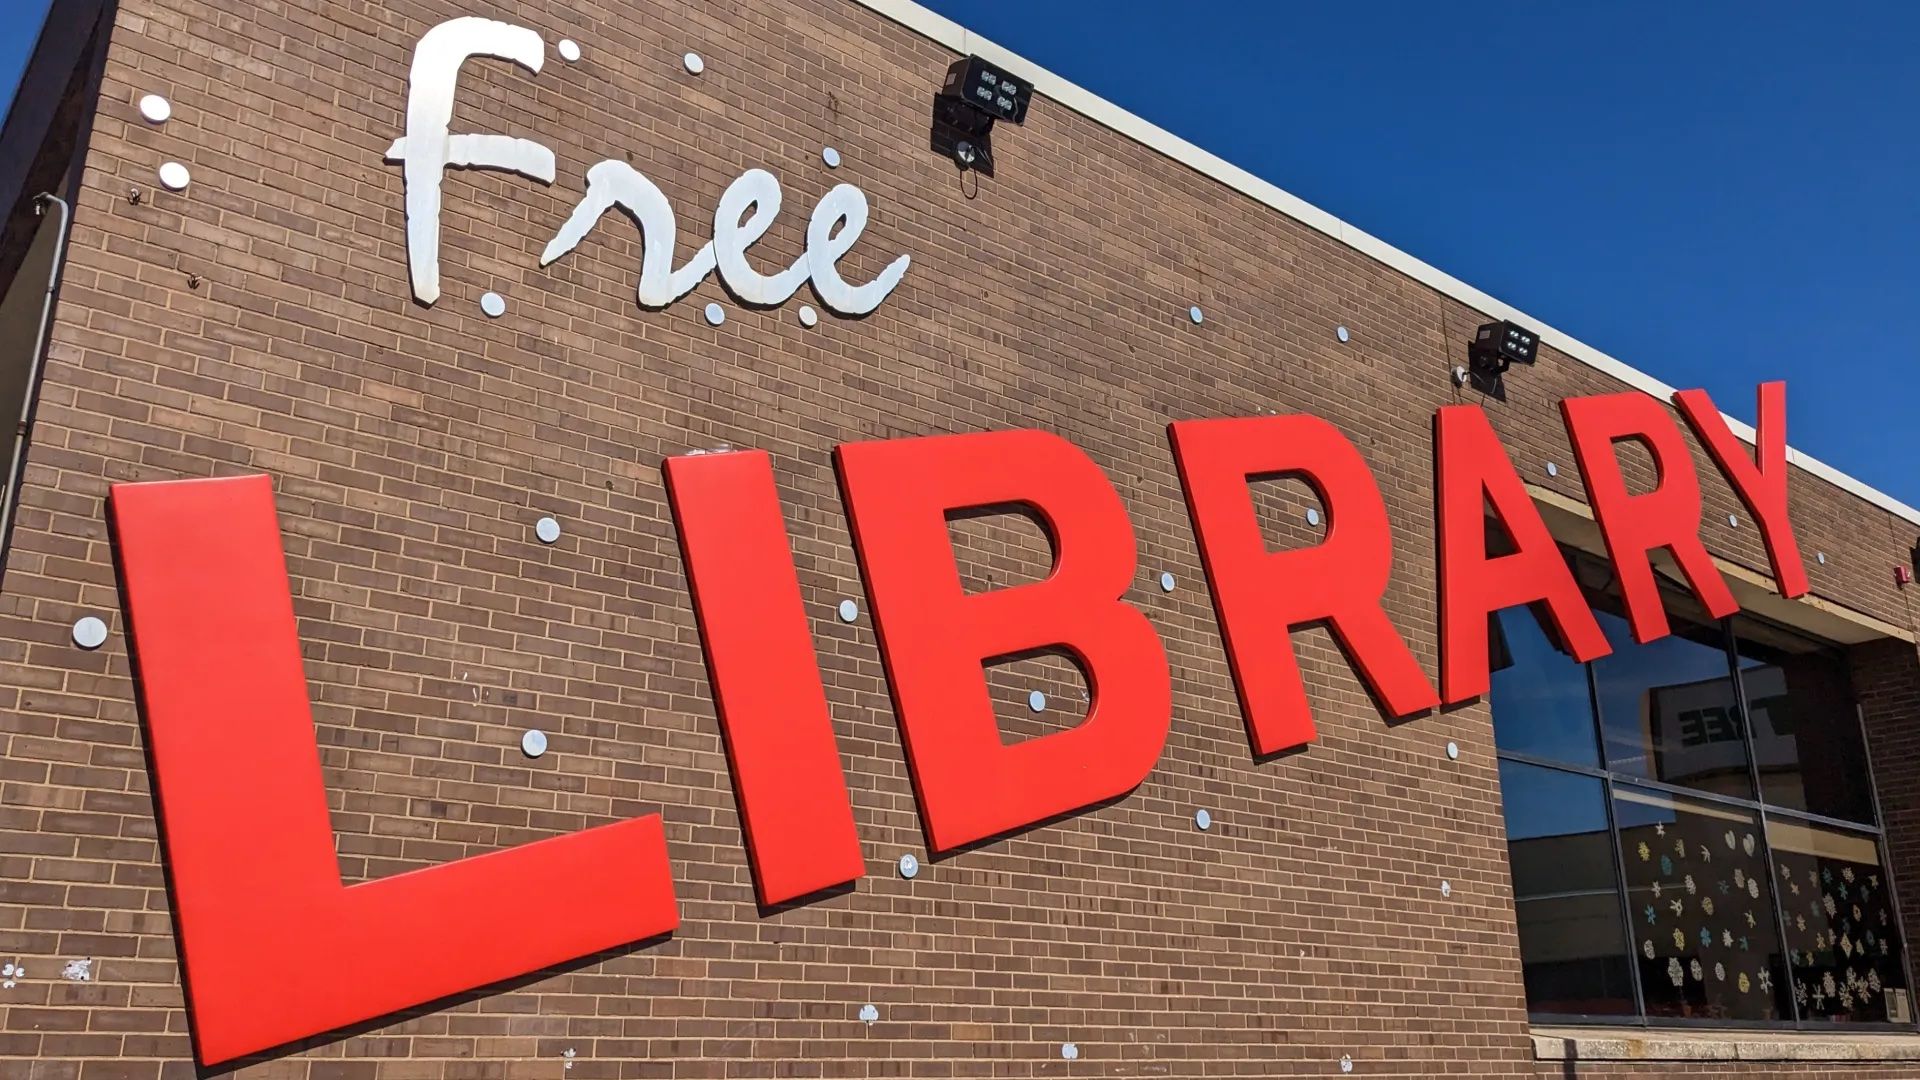 The Free Library of Philadelphia Andorra branch